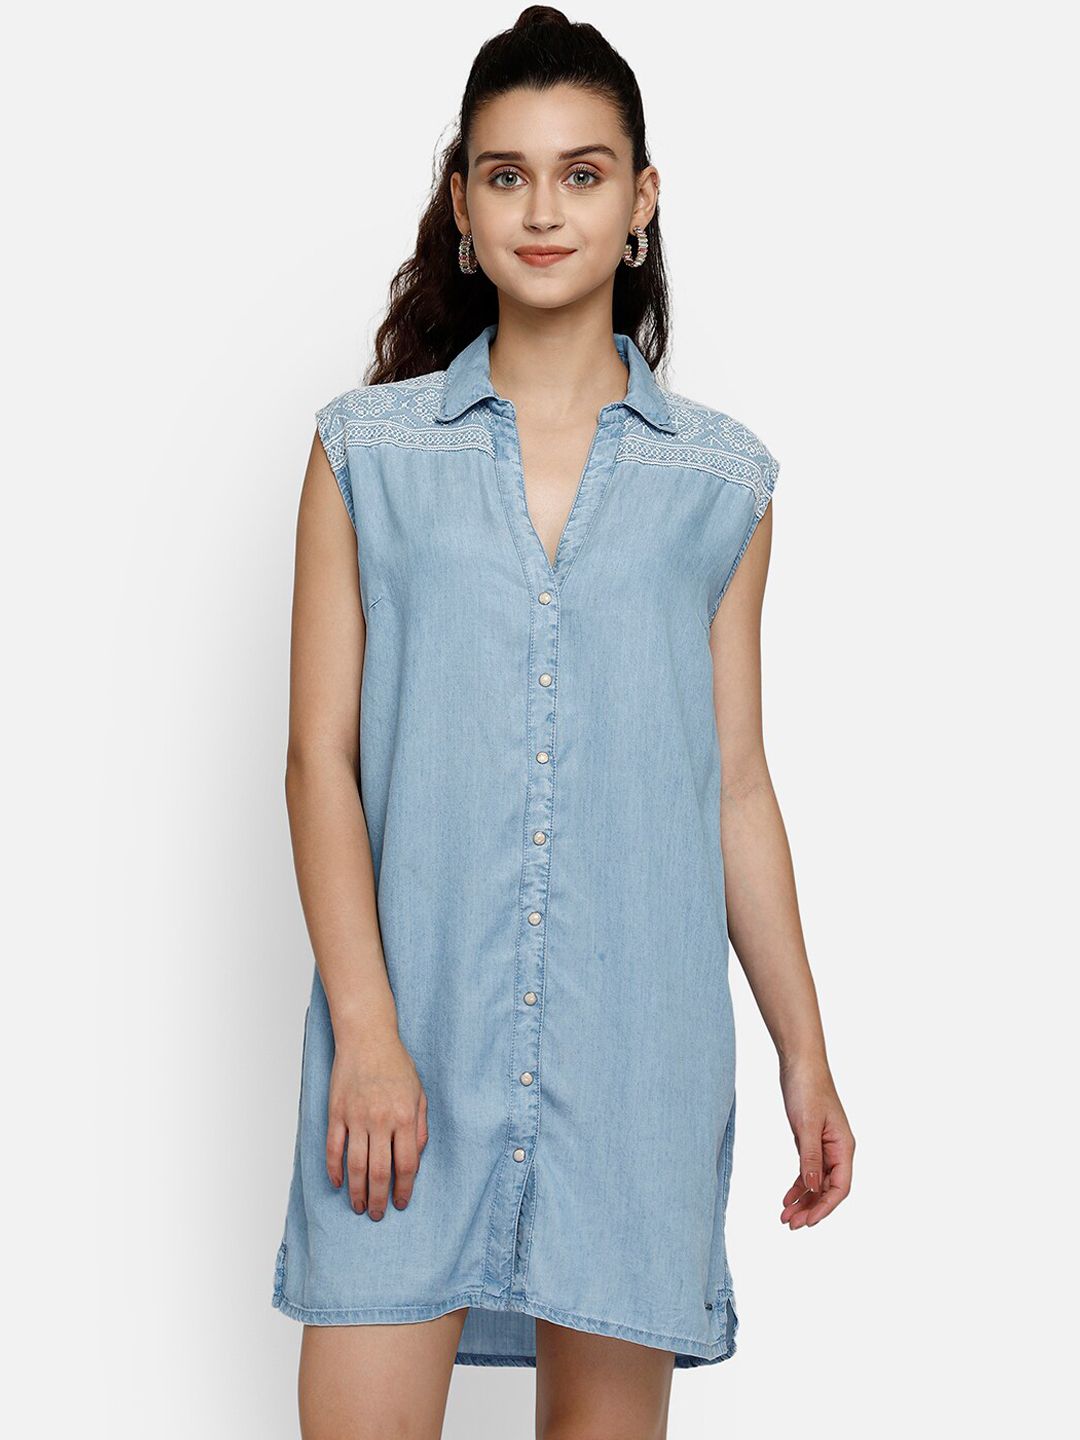 Aditi Wasan Women Blue Shirt Dress Price in India